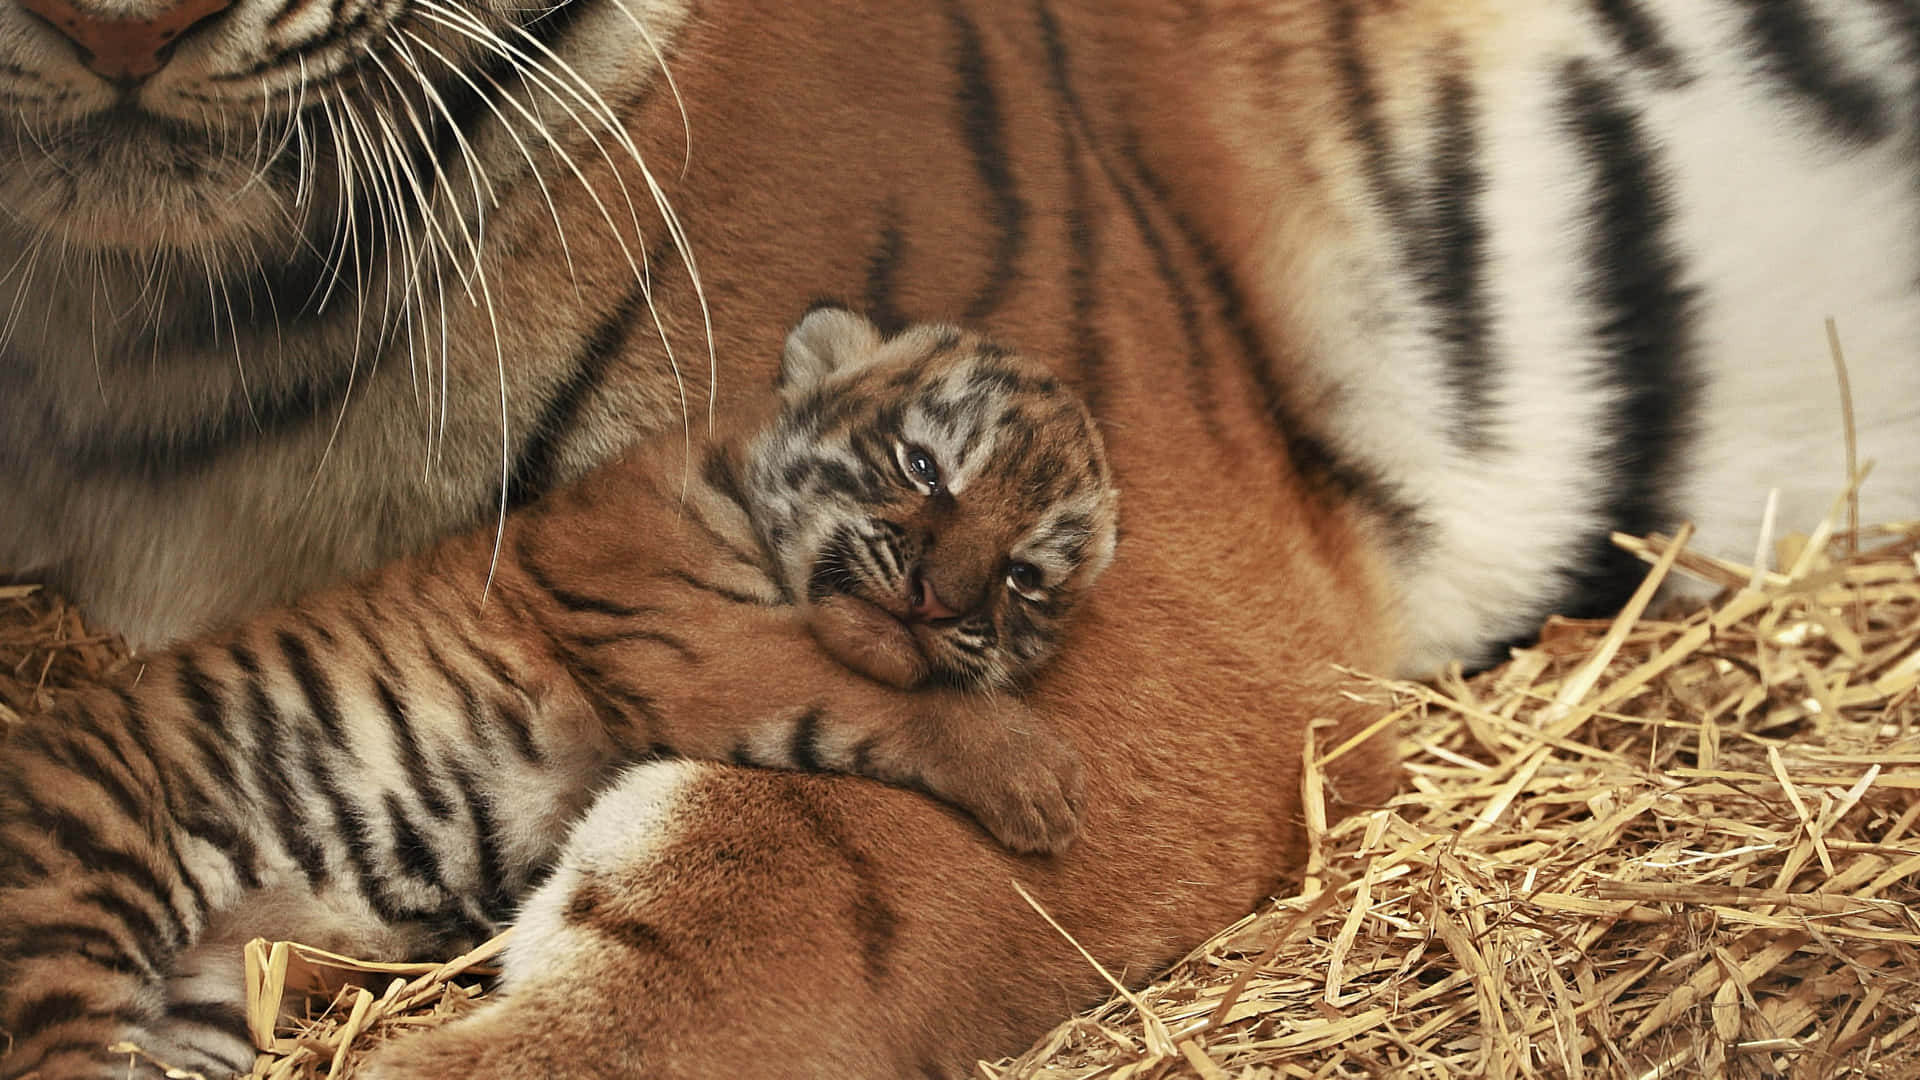 An adorable baby tiger cub exploring its ever-growing environment